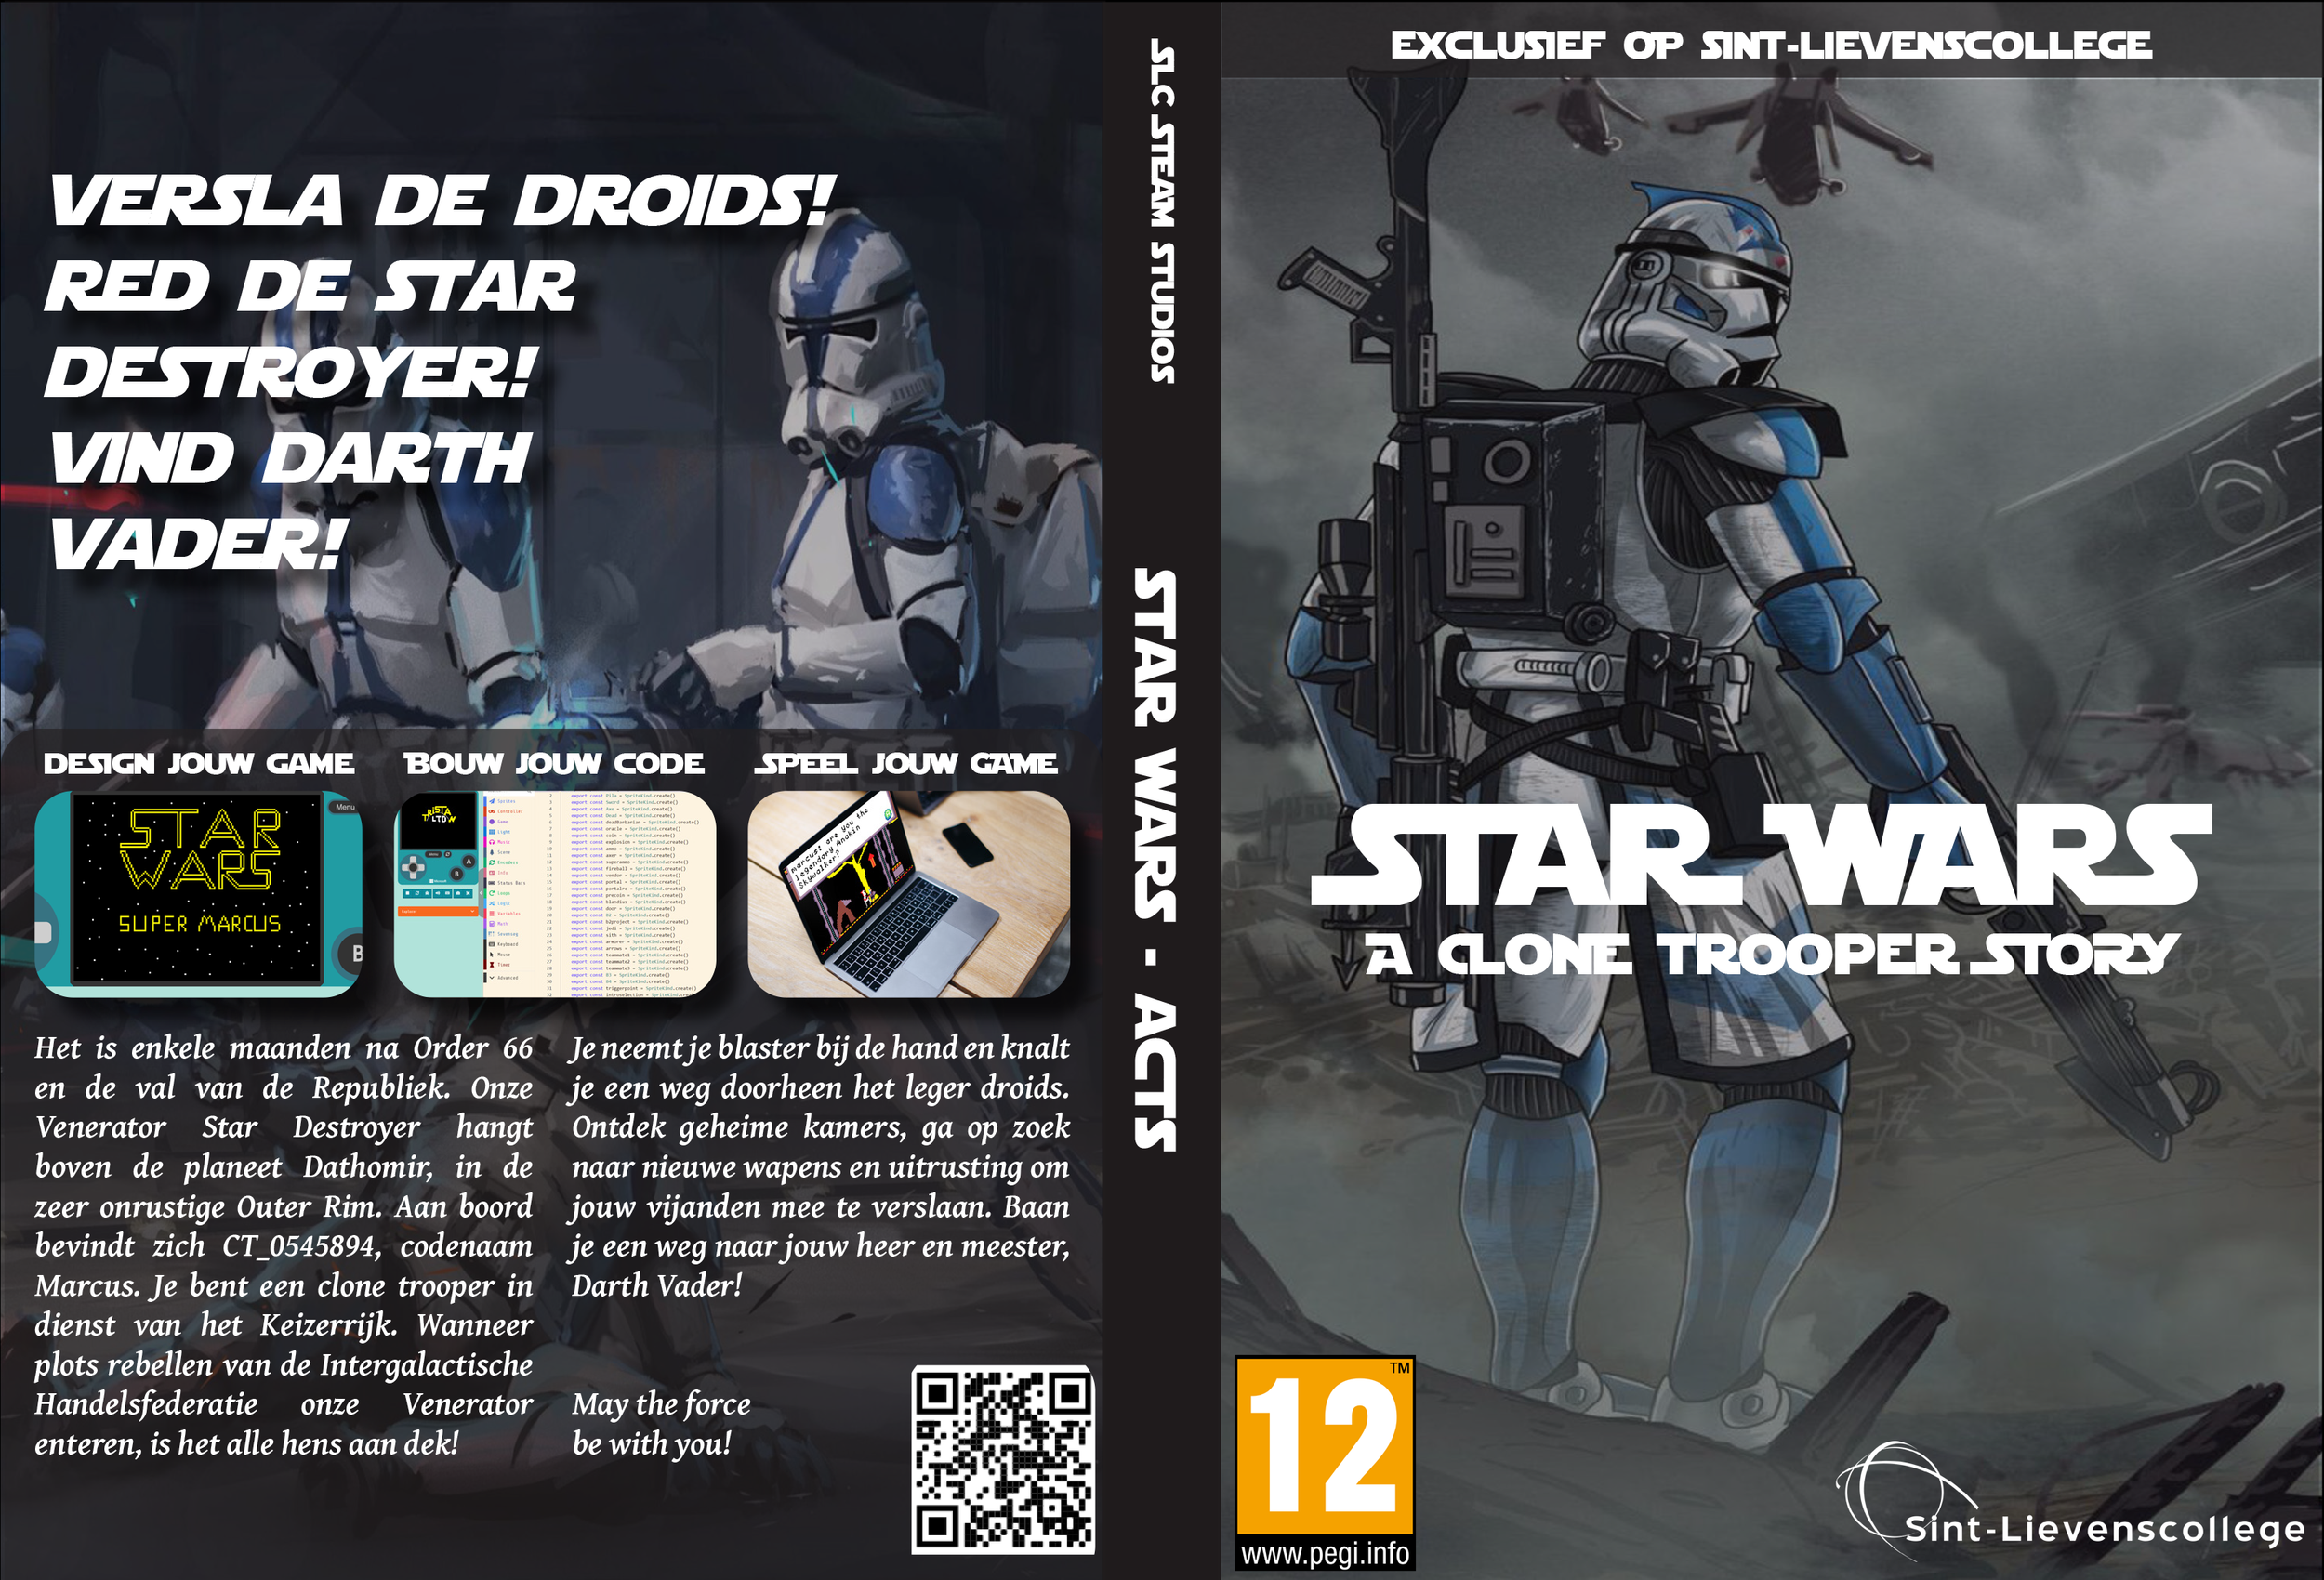 Star Wars: A Clone Trooper Story